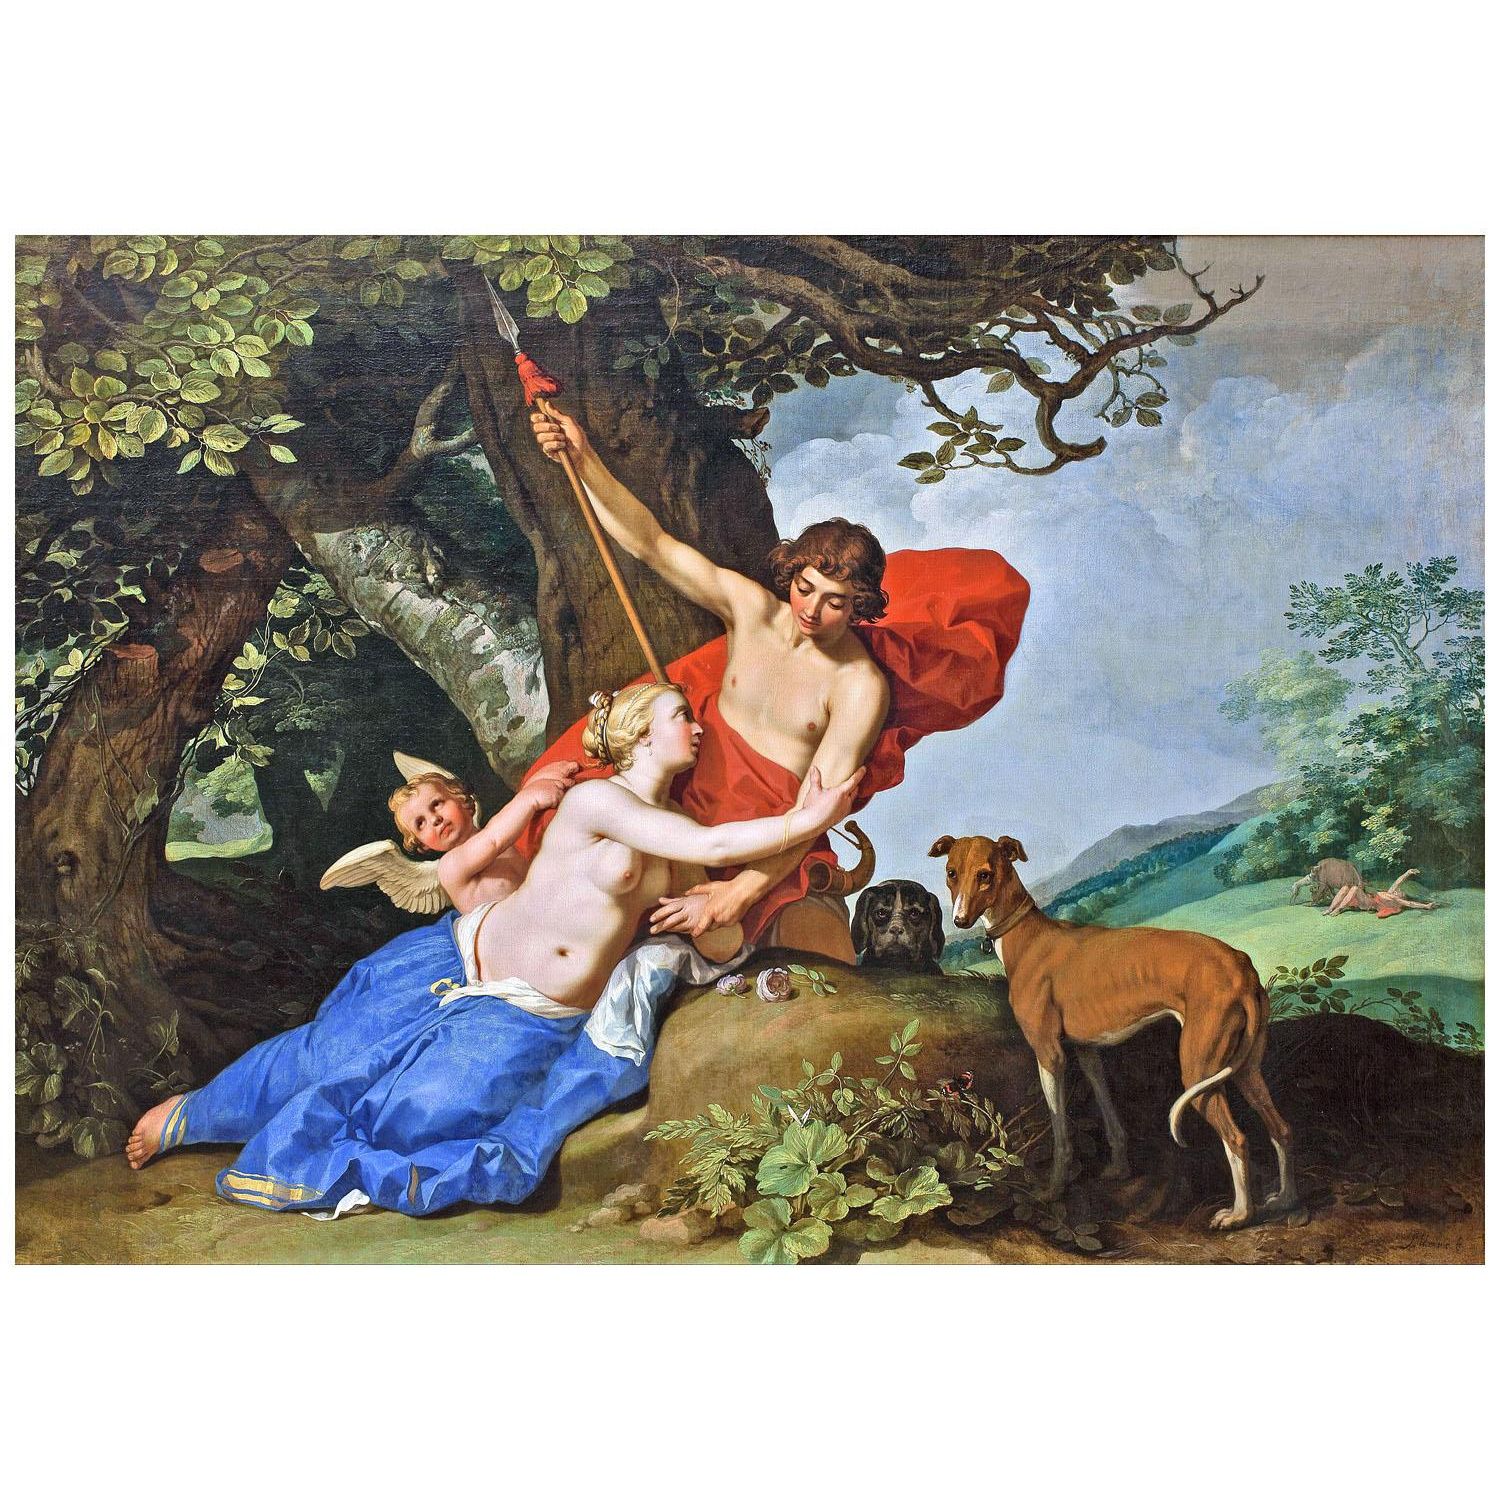 Abraham Bloemaerts. Venus and Adonis. 1632. Statens Museum for Kunst Copenhagen